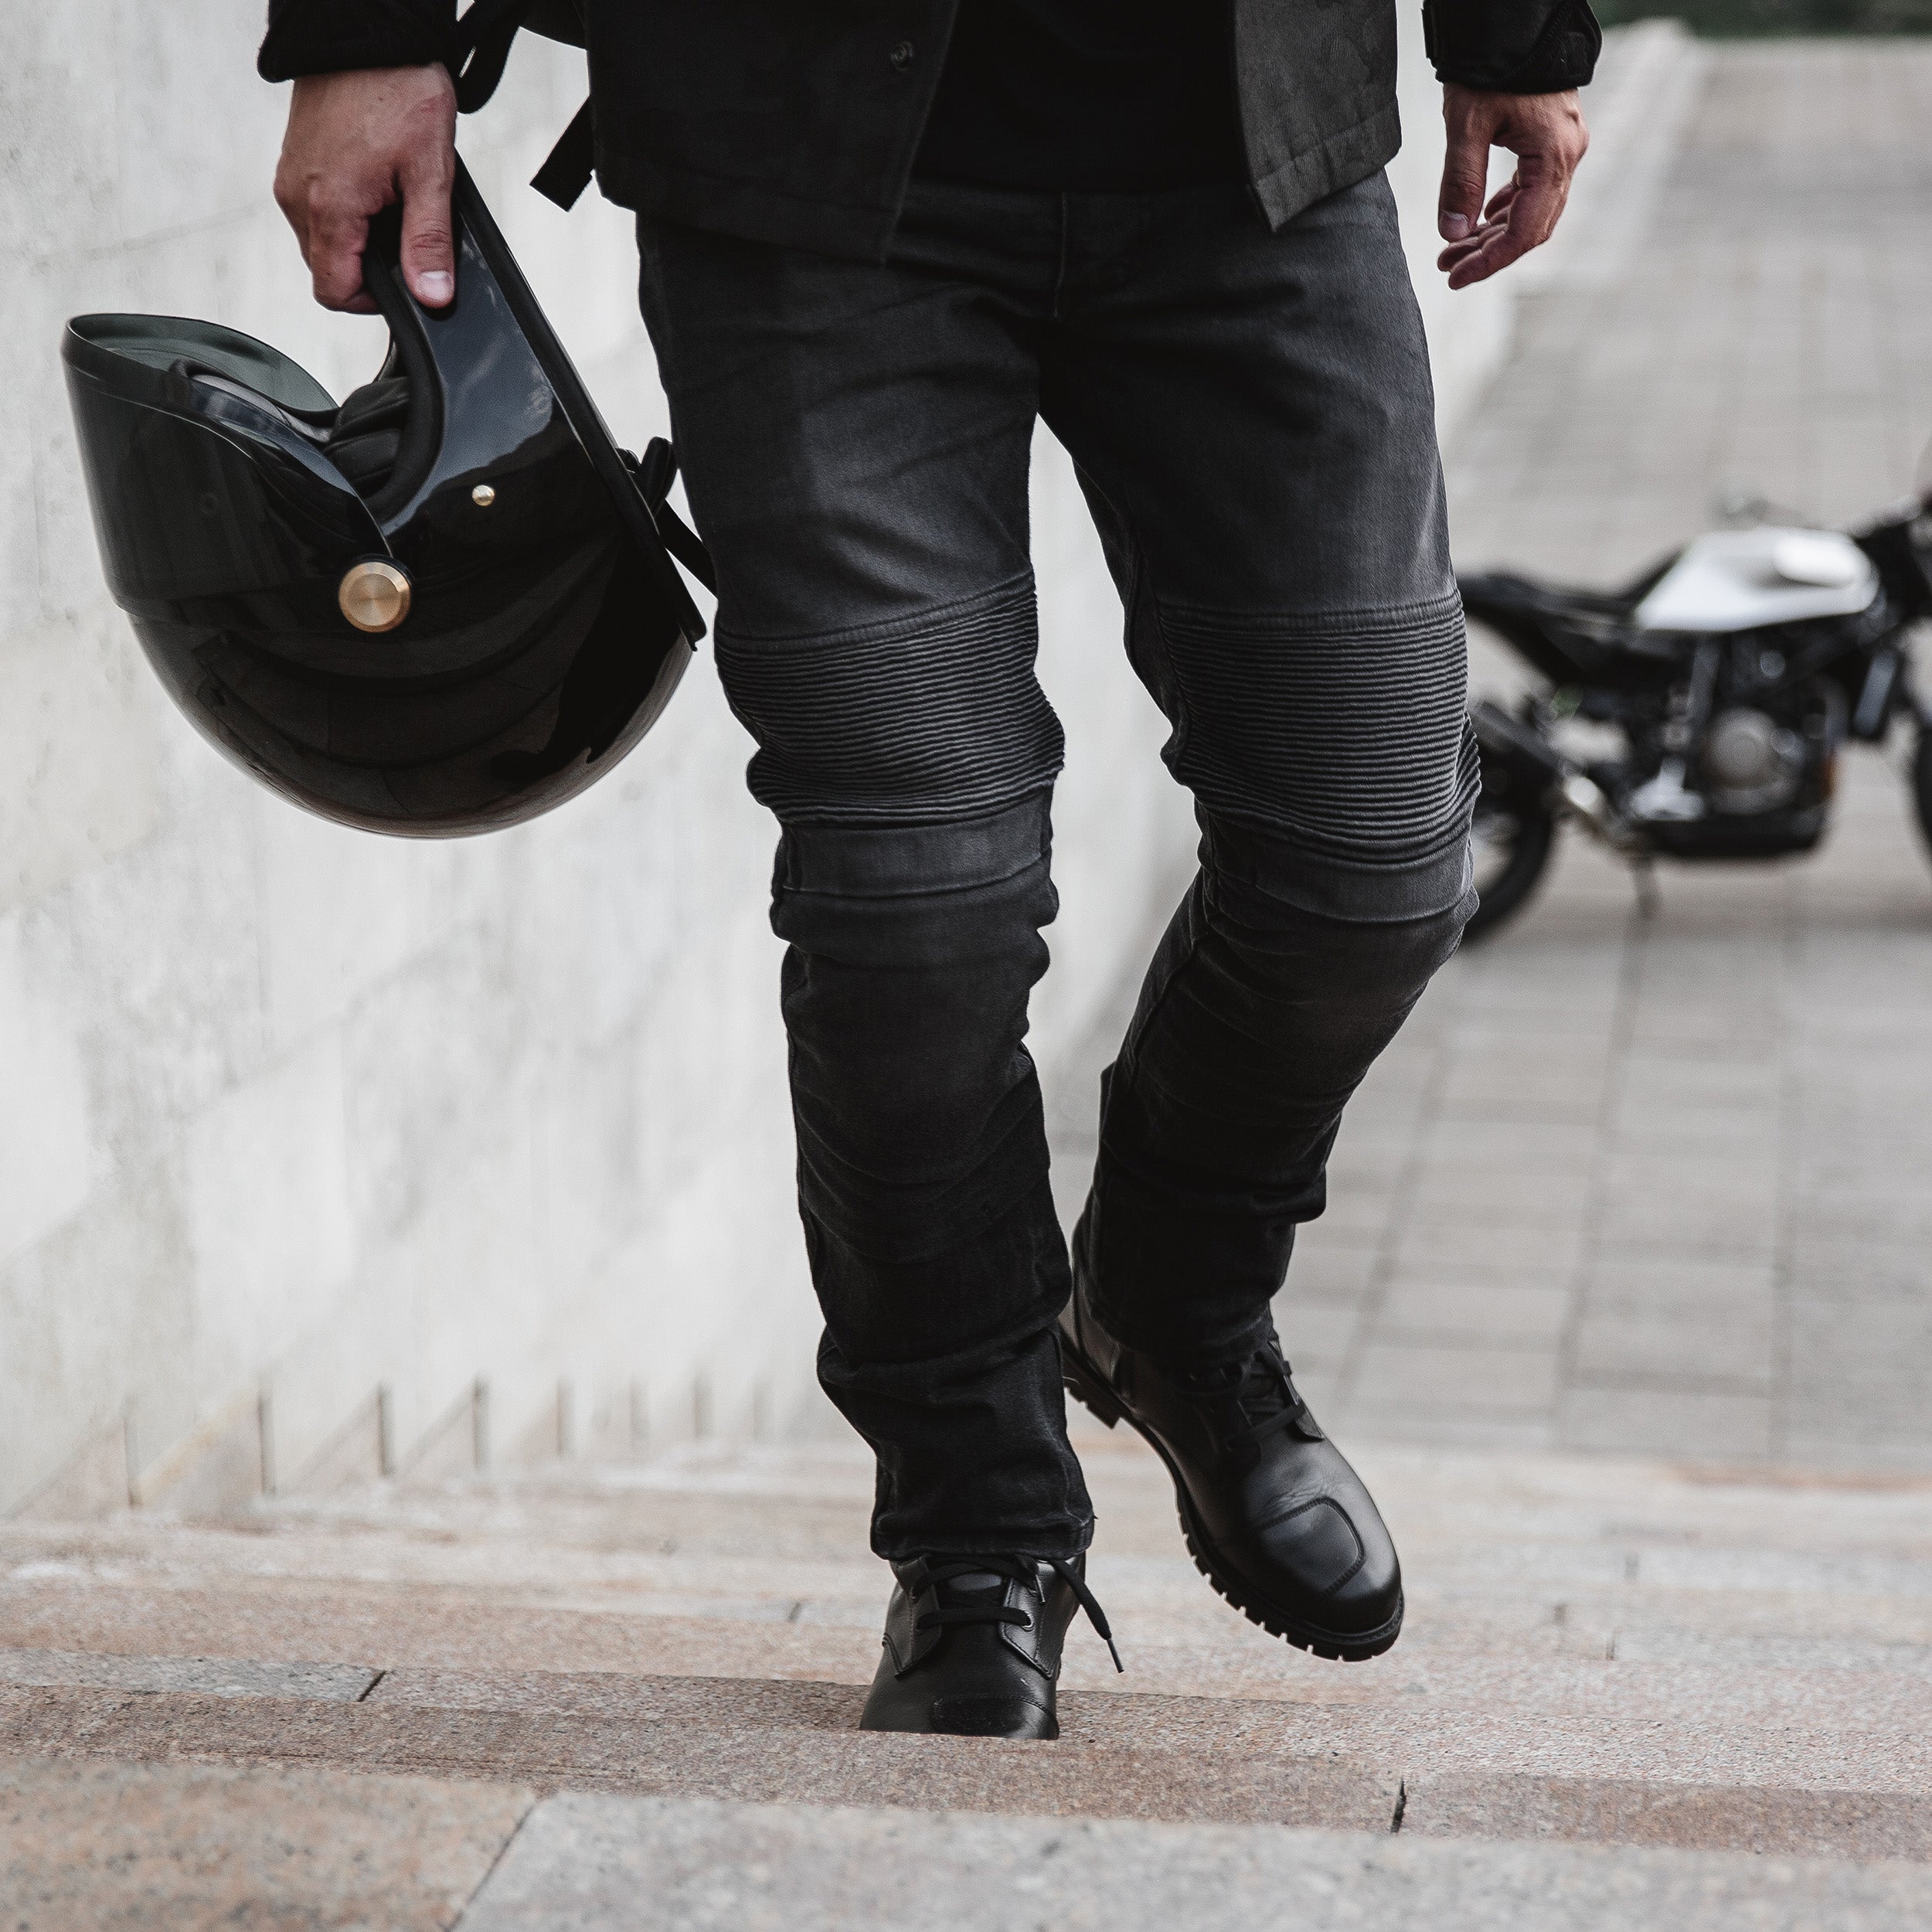 Motofever - Buy Motorcycle Helmets, Bike Gears & Accessories Online